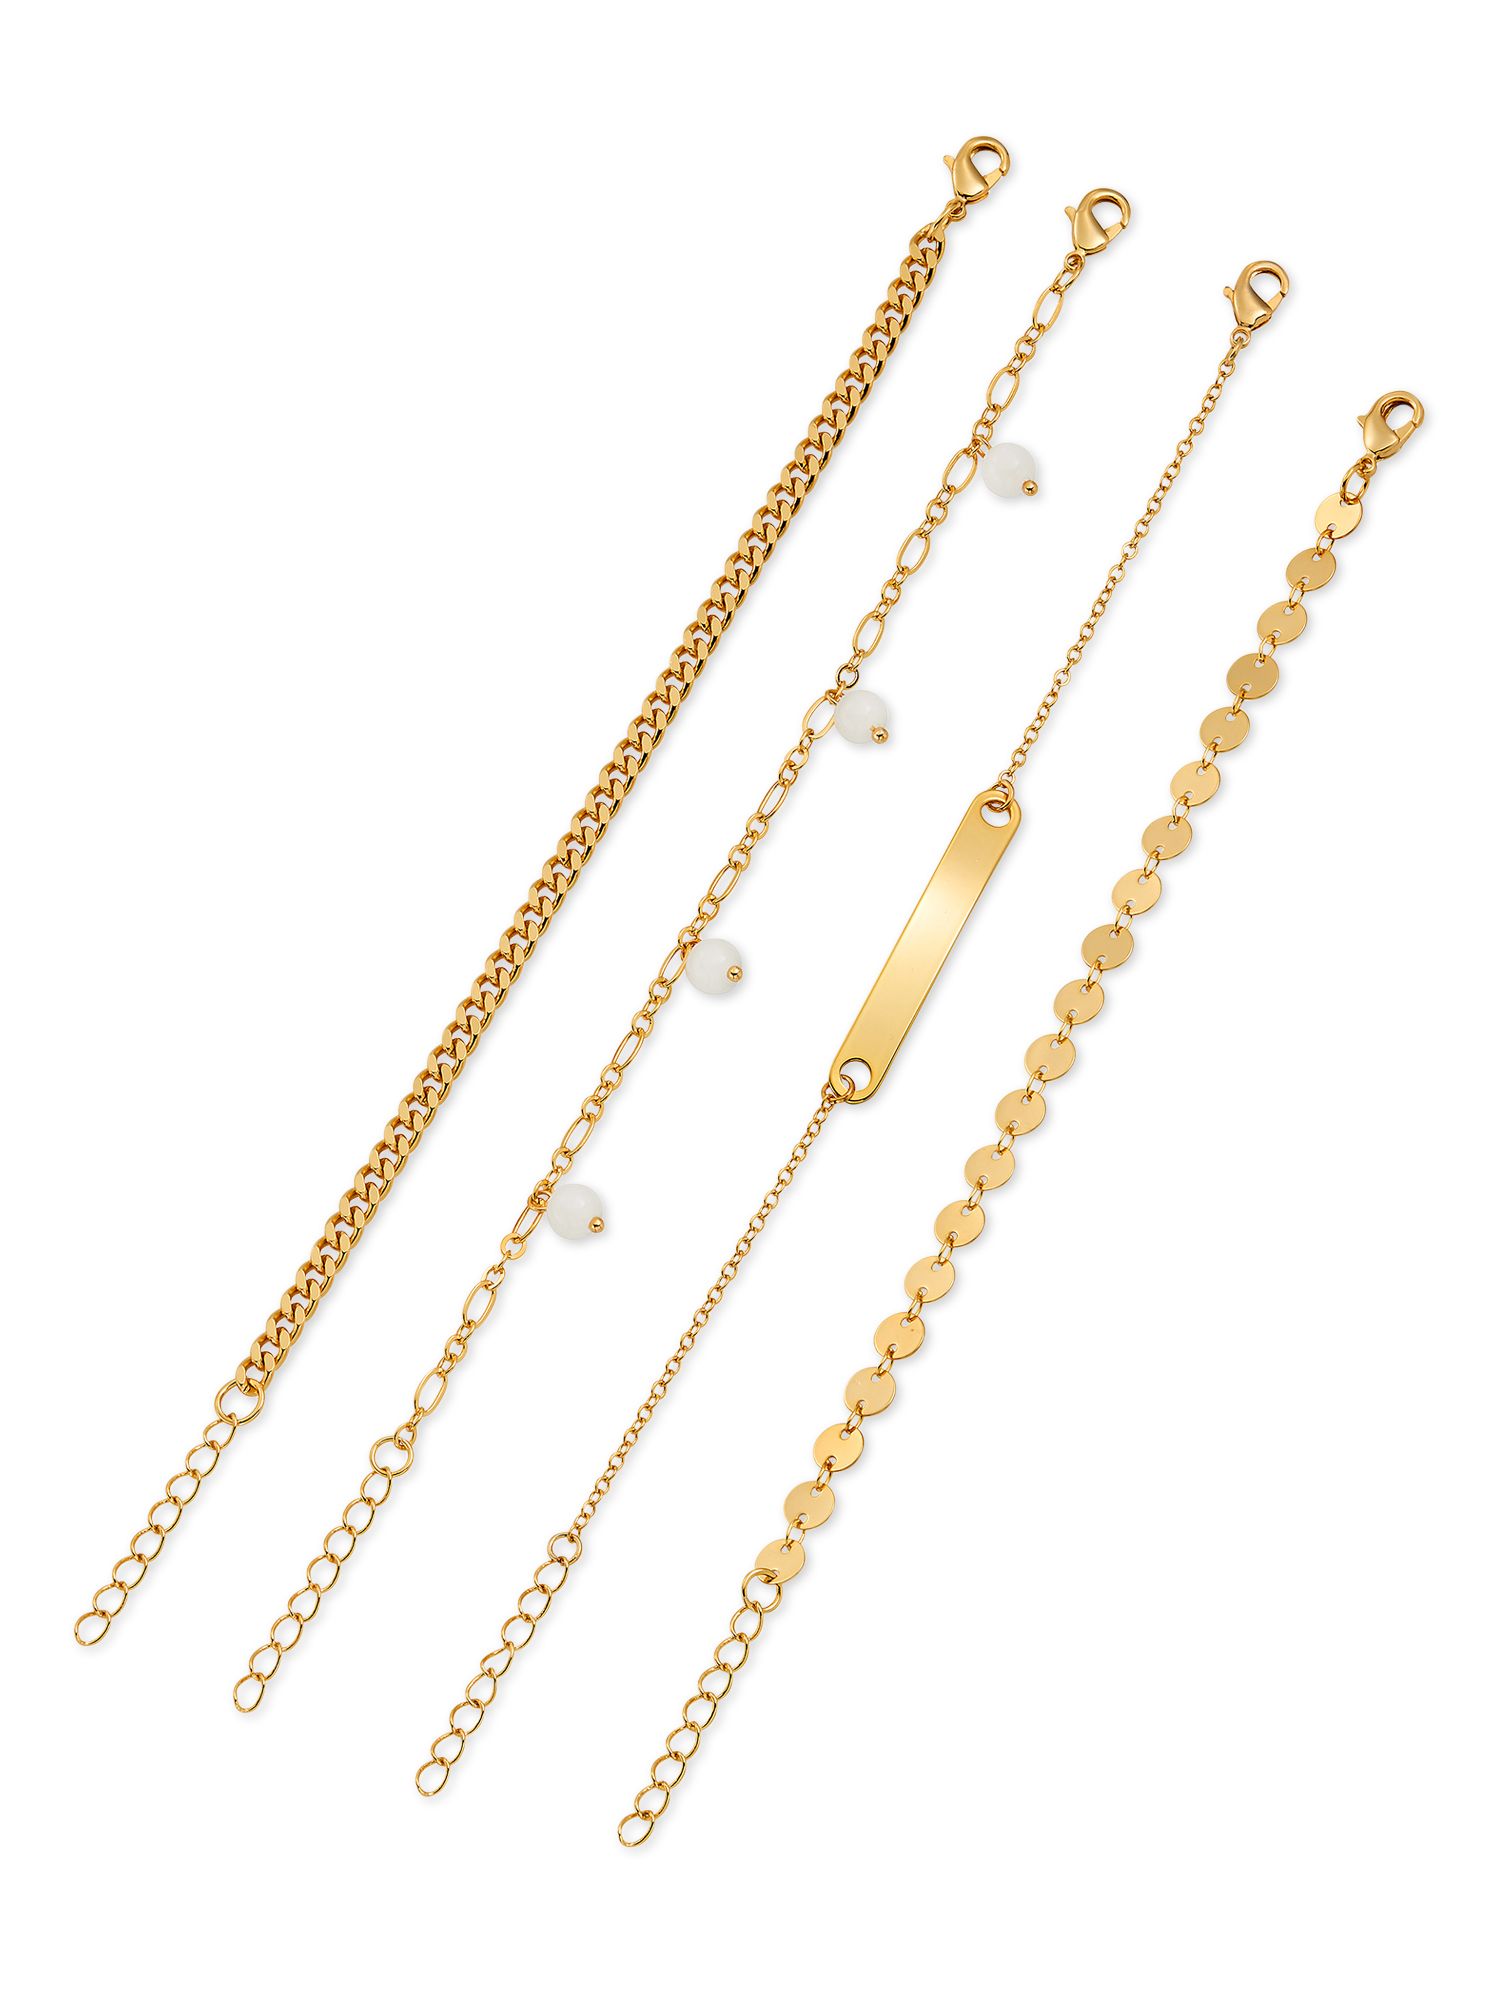 Scoop Womens Brass Yellow Gold-Plated Fashion Bracelets, 4-Piece Set | Walmart (US)